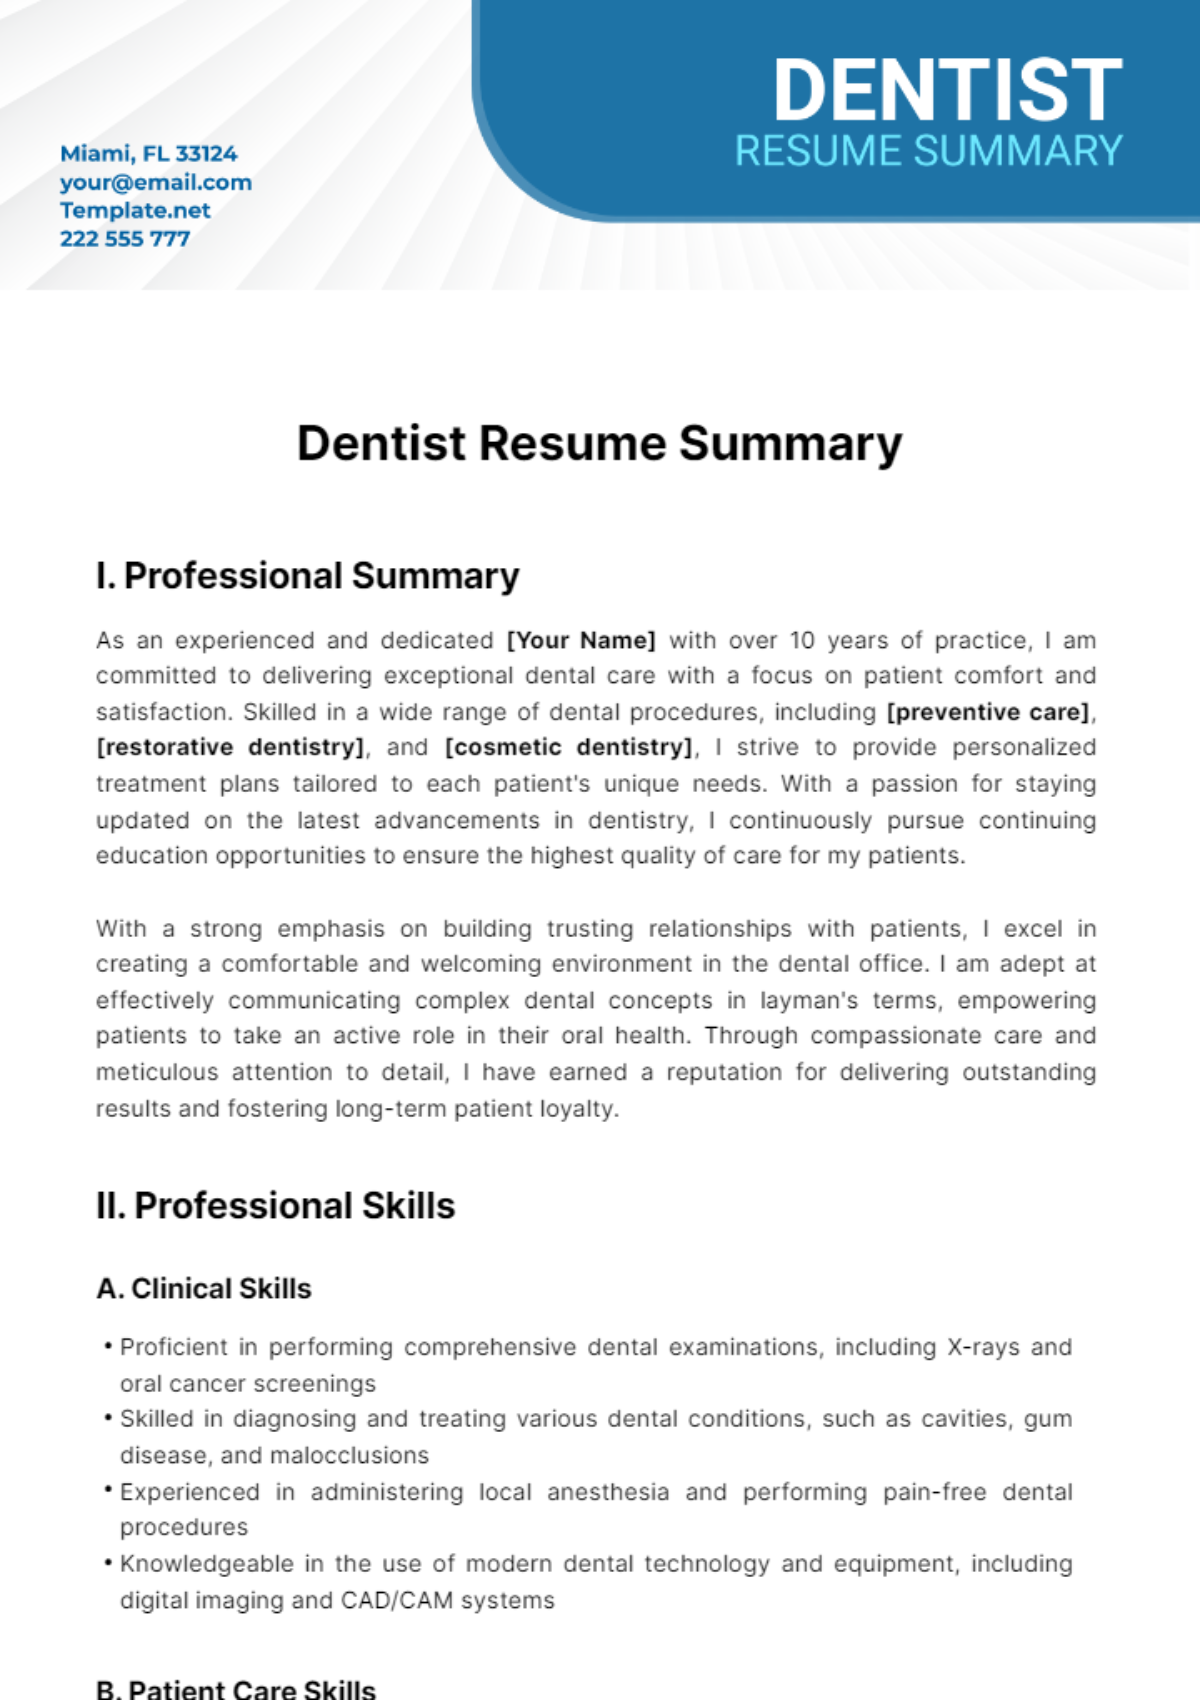 Free Dentist Resume Summary Template